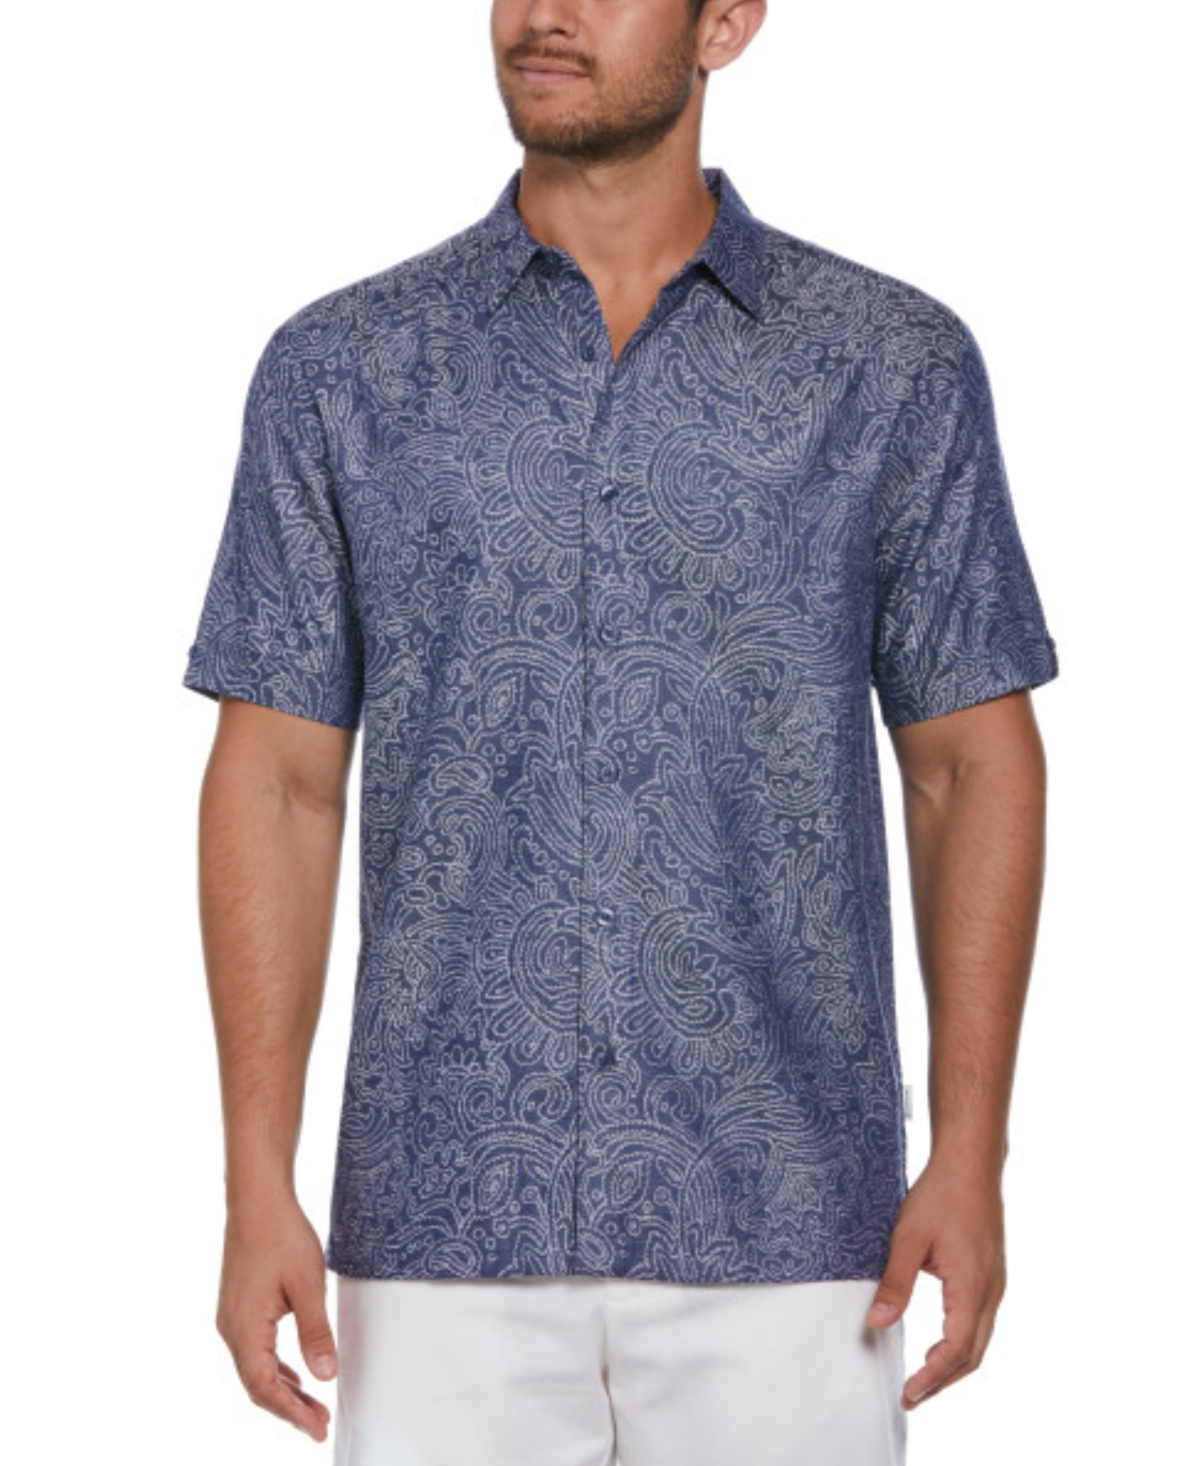 Men's Short Sleeve Jacquard Abstract Floral Paisley Print Shirt - Oceana